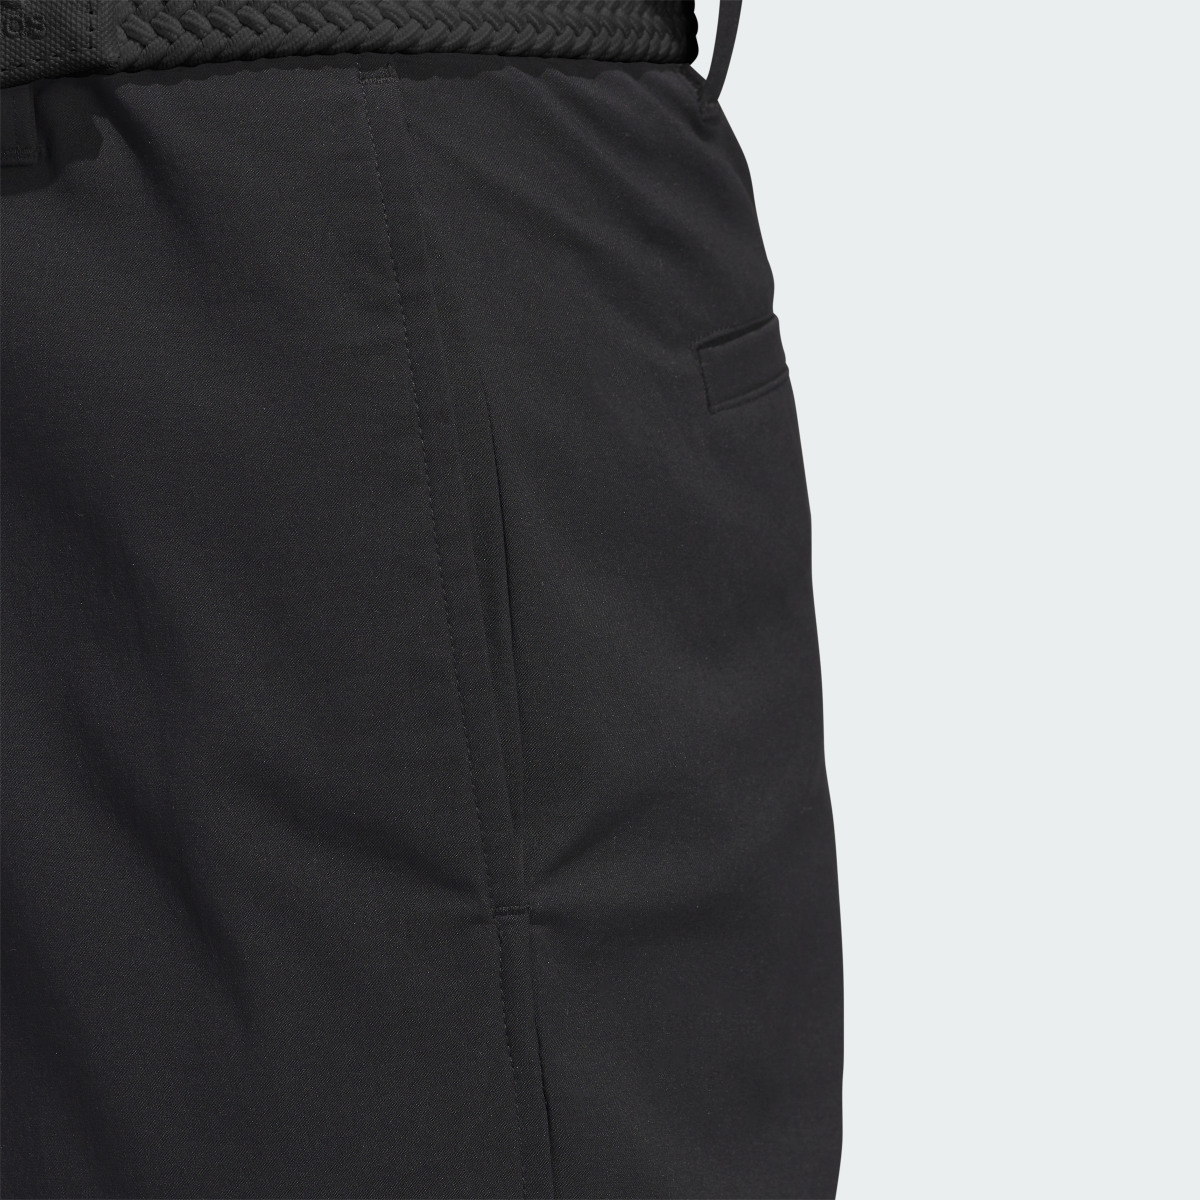 Adidas Ultimate365 Chino Pants. 6